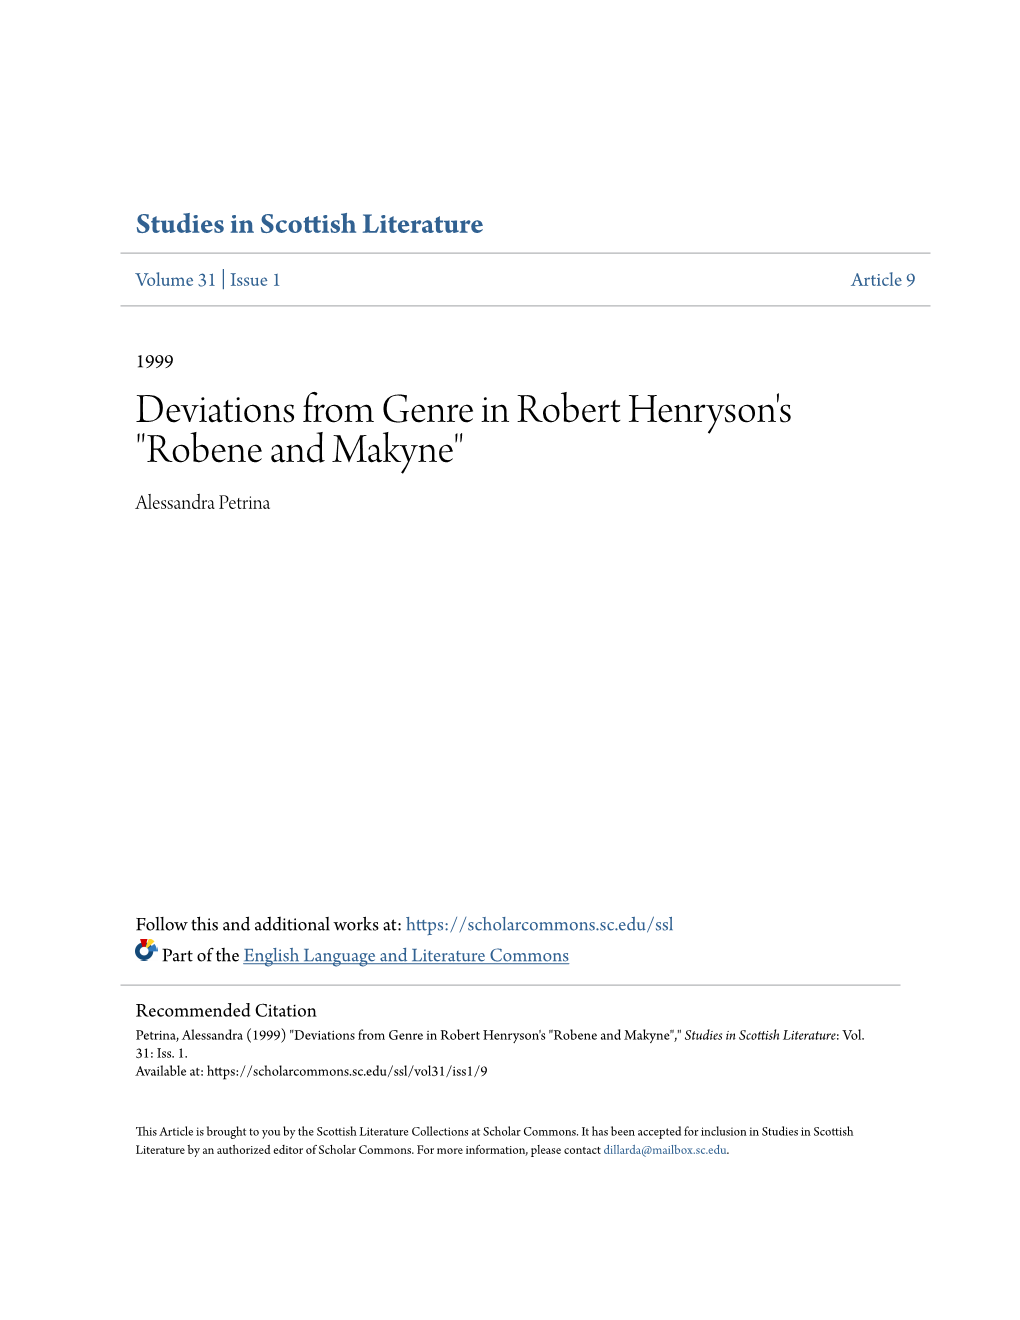 Deviations from Genre in Robert Henryson's "Robene and Makyne" Alessandra Petrina